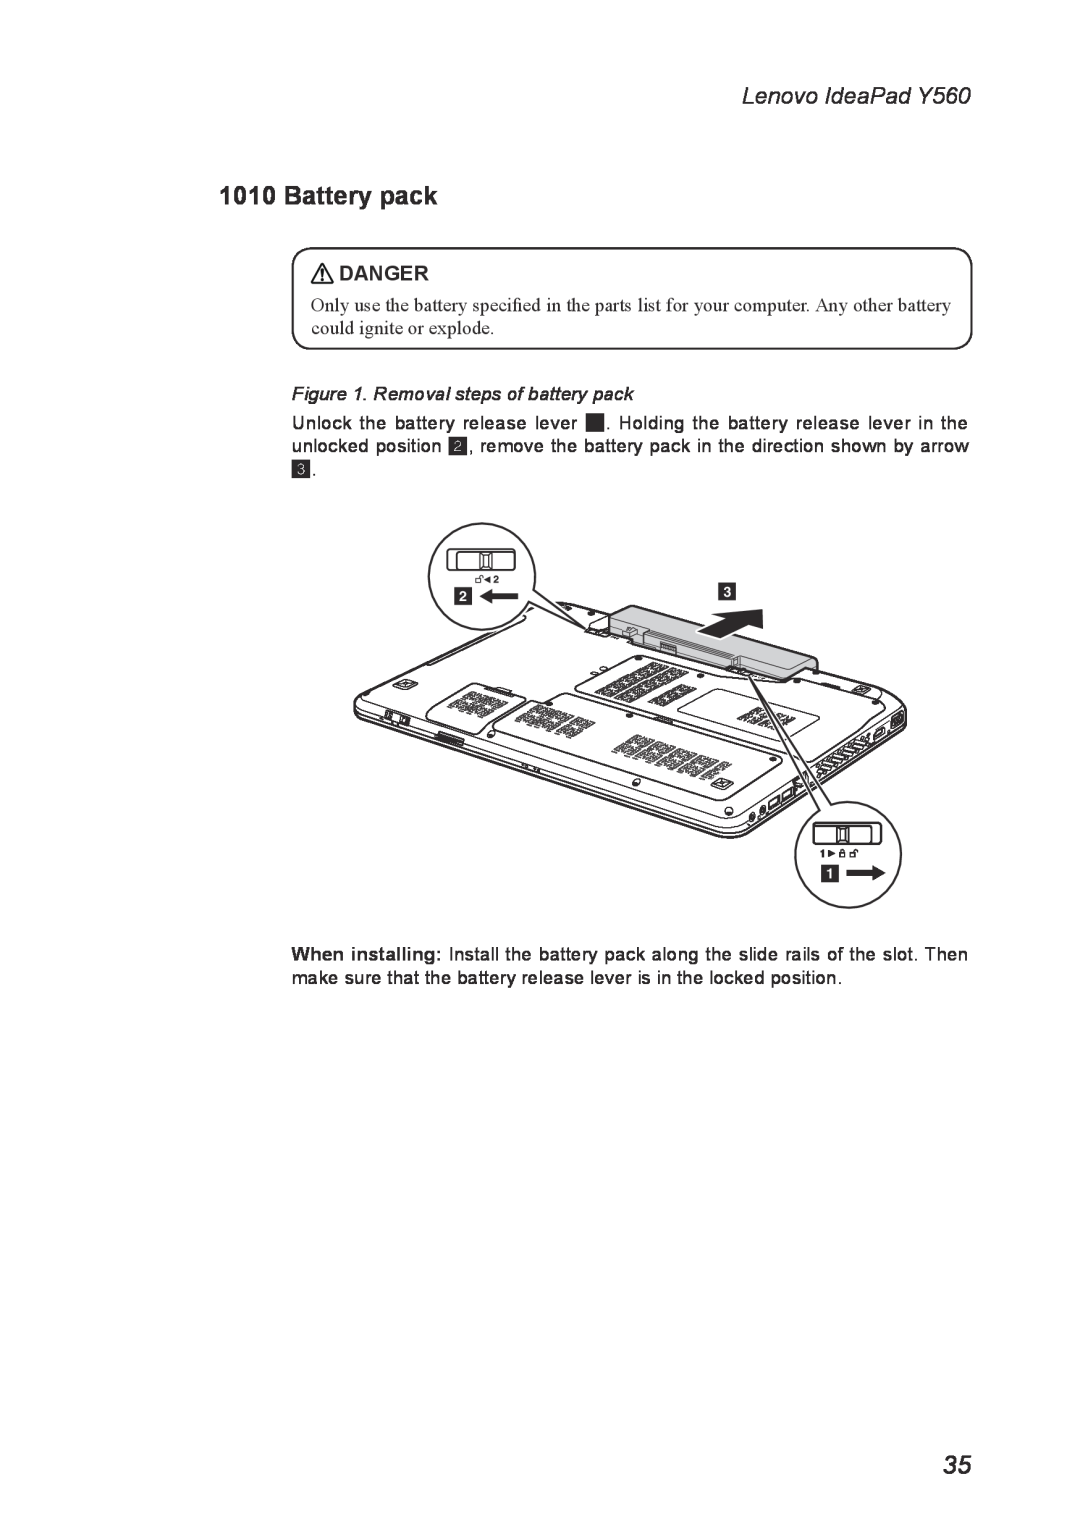 Lenovo manual Battery pack, Removal steps of battery pack, Lenovo IdeaPad Y560, Danger 